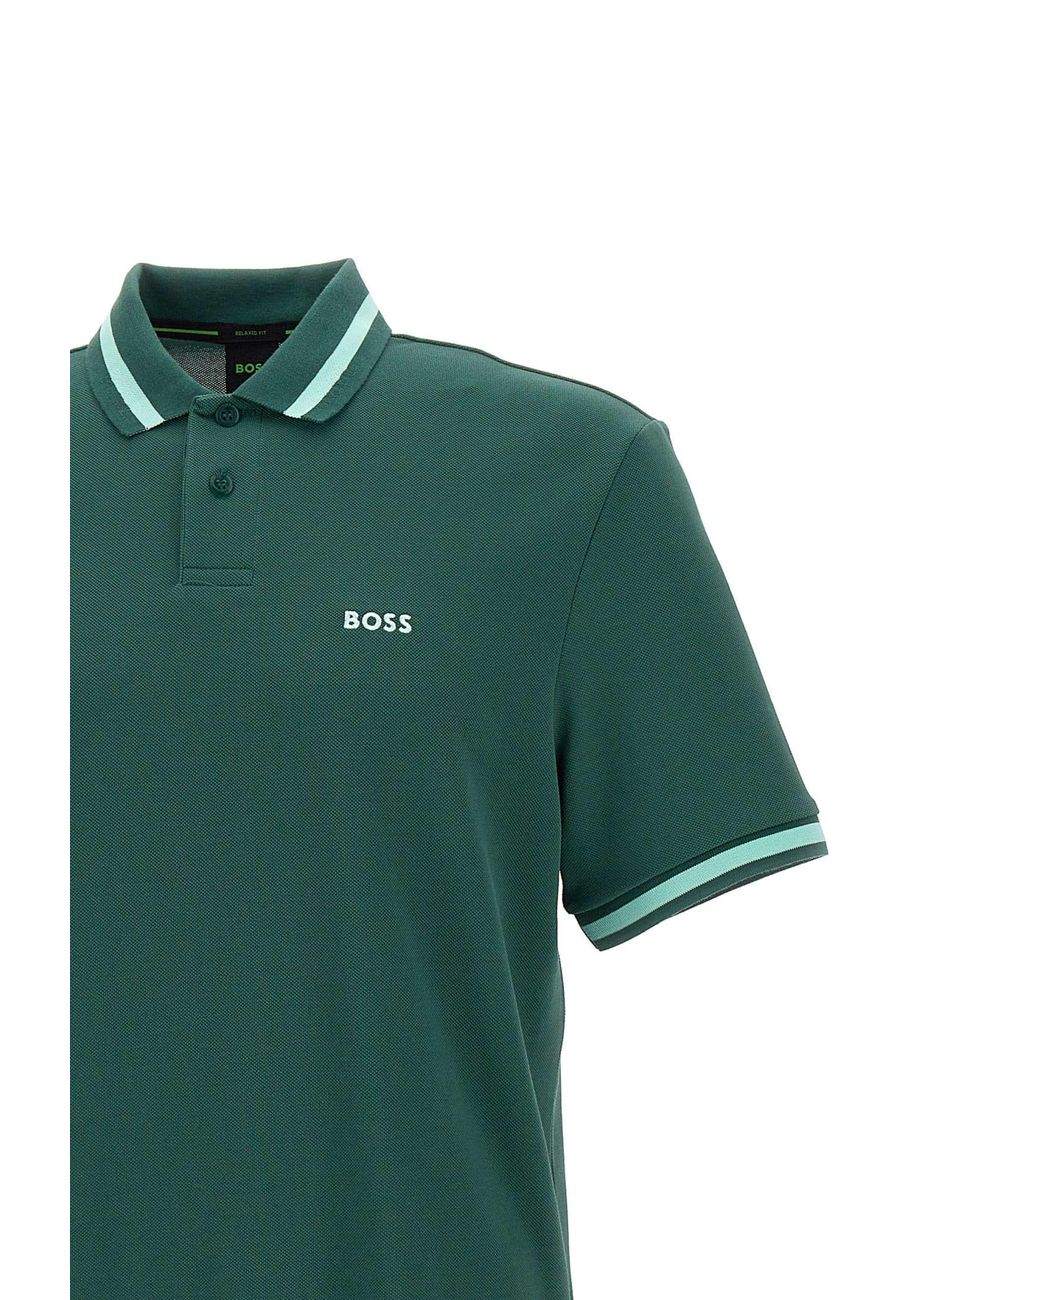 BOSS by HUGO BOSS Boss Pio Cotton Polo Shirt in Green for Men | Lyst